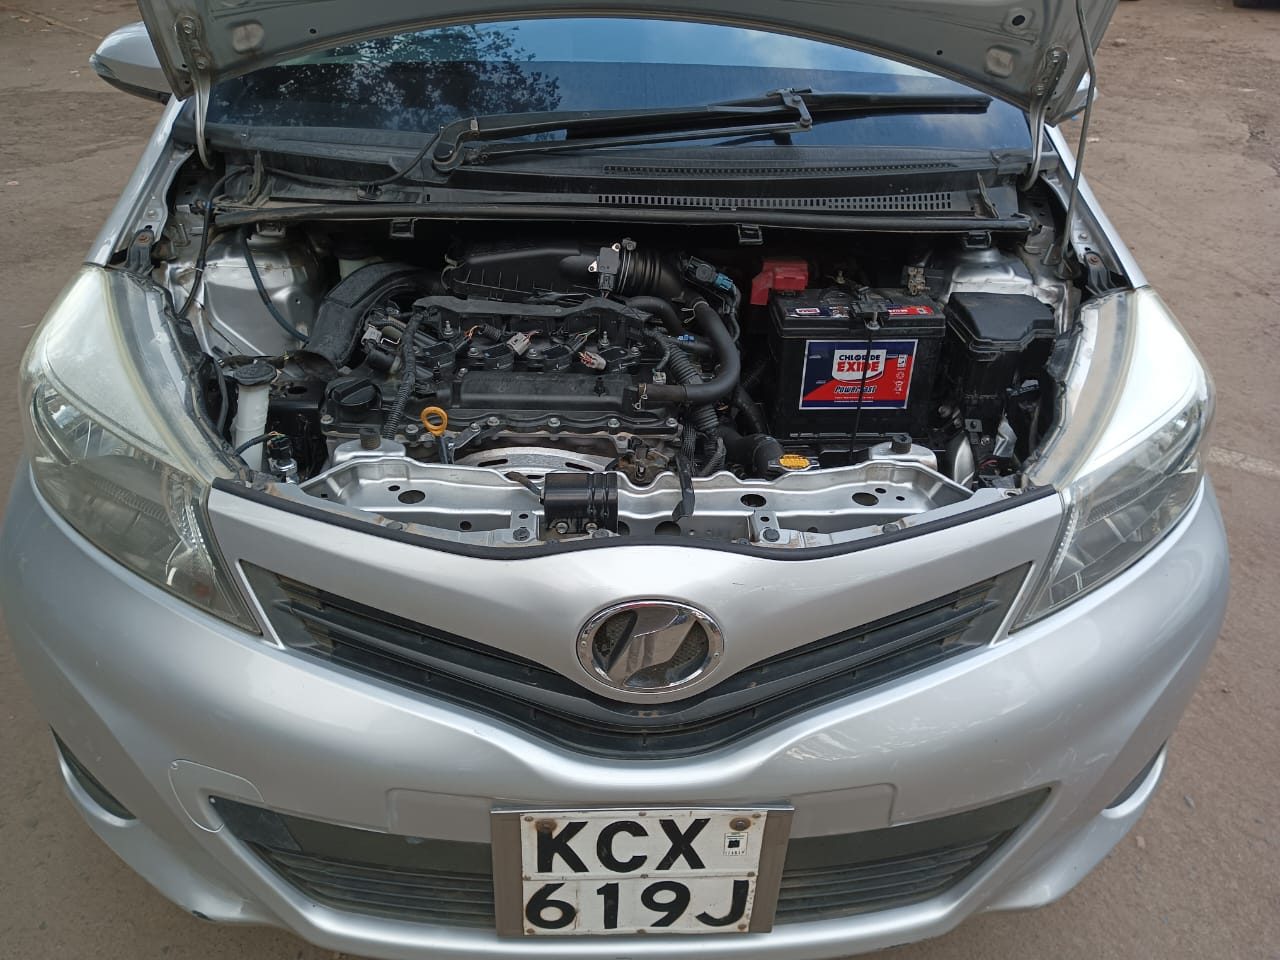 Toyota VITZ 1300cc pay 20% deposit, hot discount!